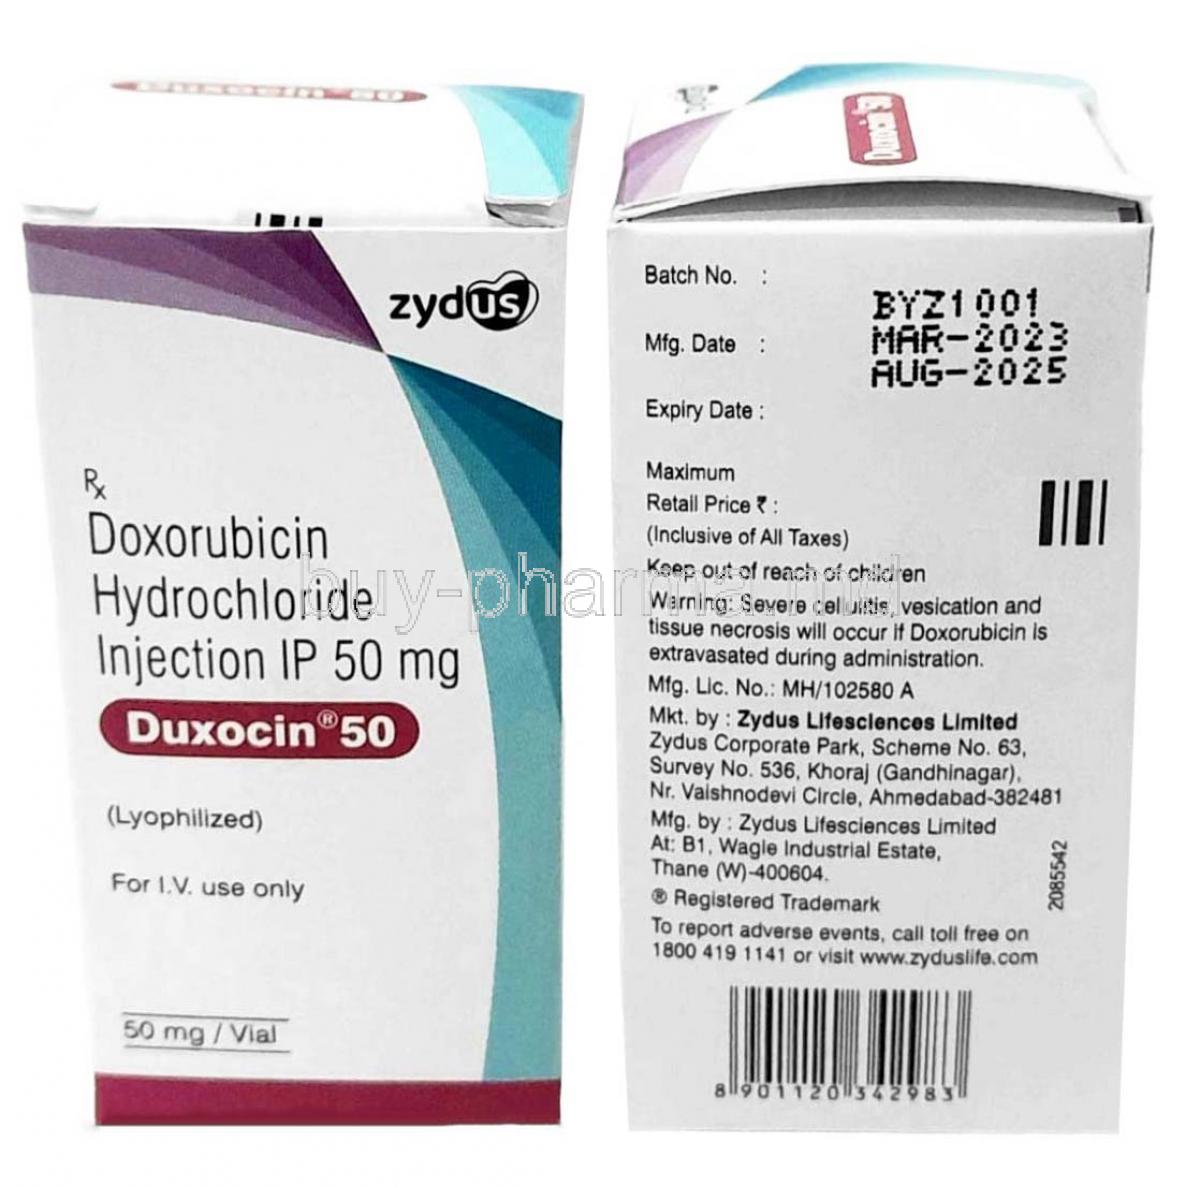 Duxocin Injection, Doxorubicin 50mg, Injection Vial for I.V, Zydus Cadila, Box front view, information